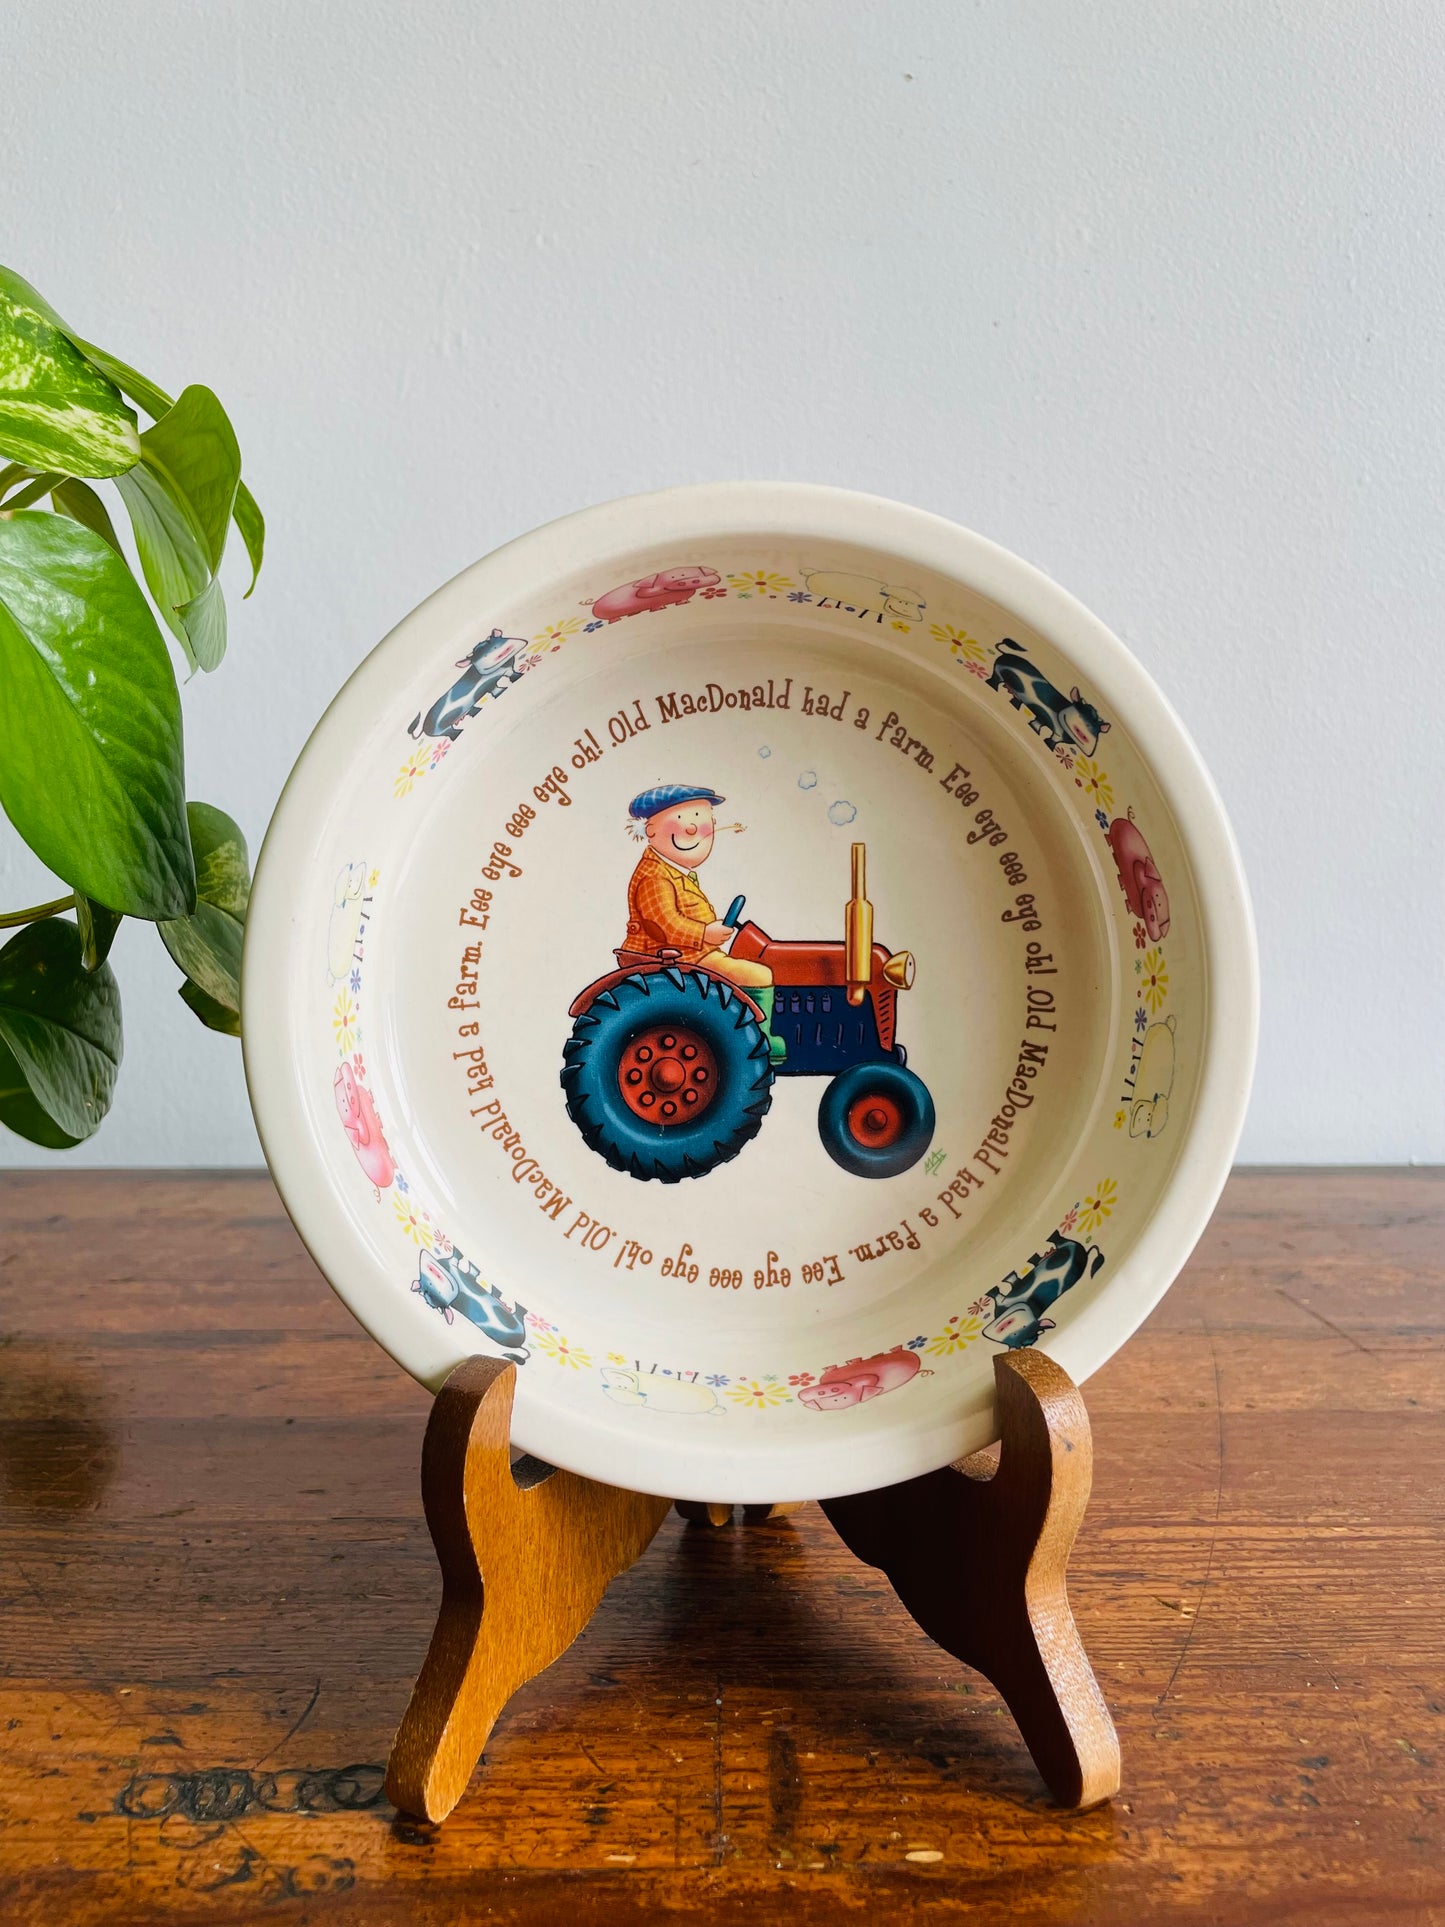 Anderton Pottery 1890 Old MacDonald Had a Farm Bowl Dish - Made in England